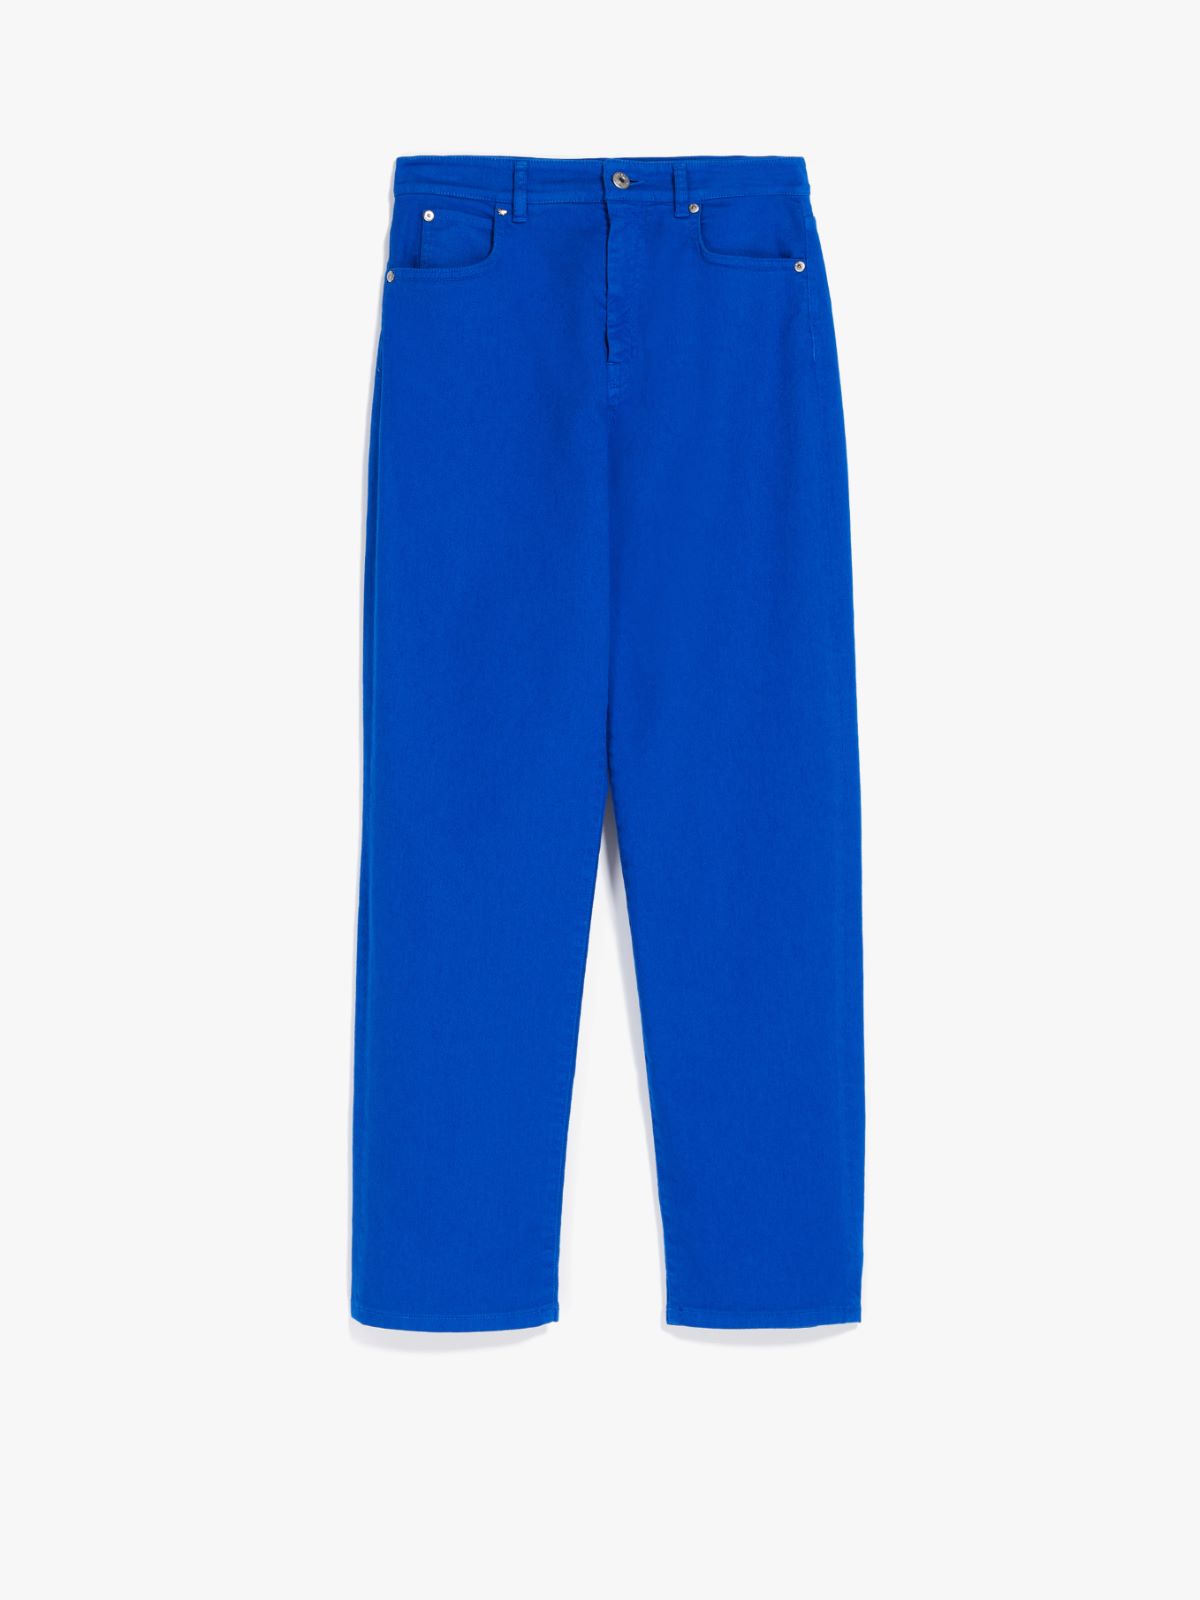 Trousers in organic cotton  - CORNFLOWER BLUE - Weekend Max Mara - 5